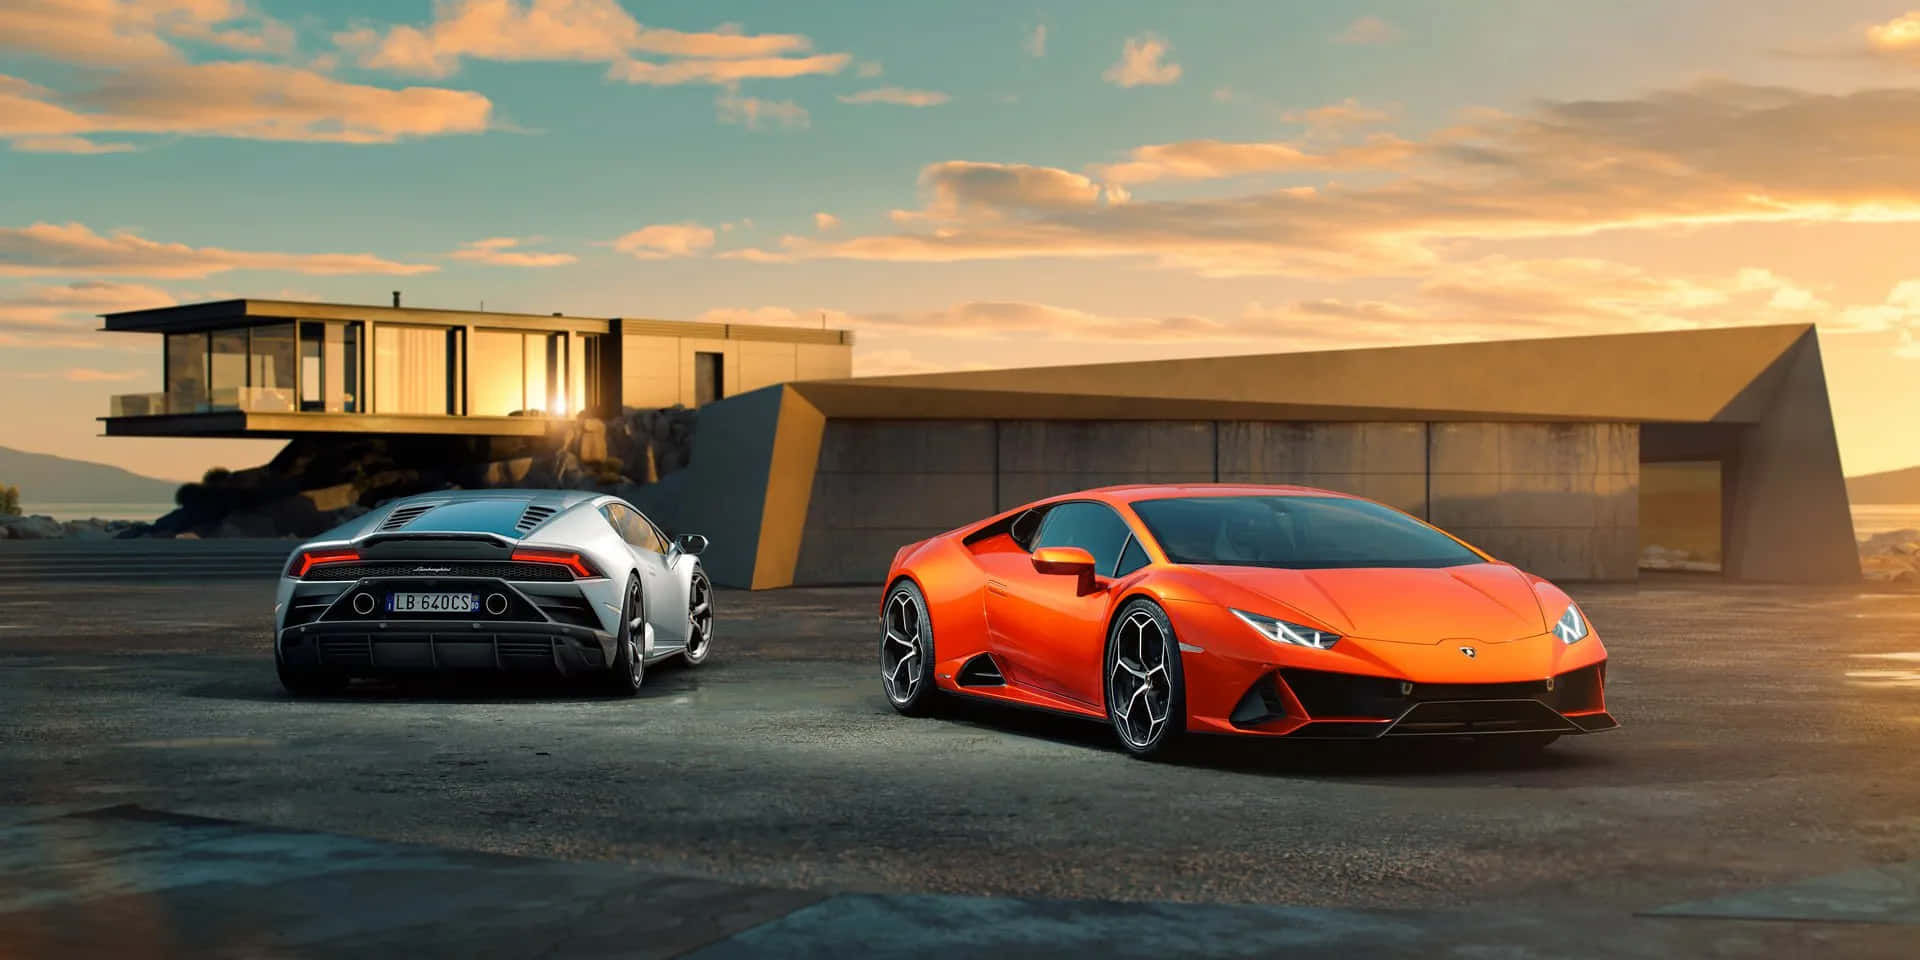 Cool Lamborghini - Cutting Edge Style&Performance